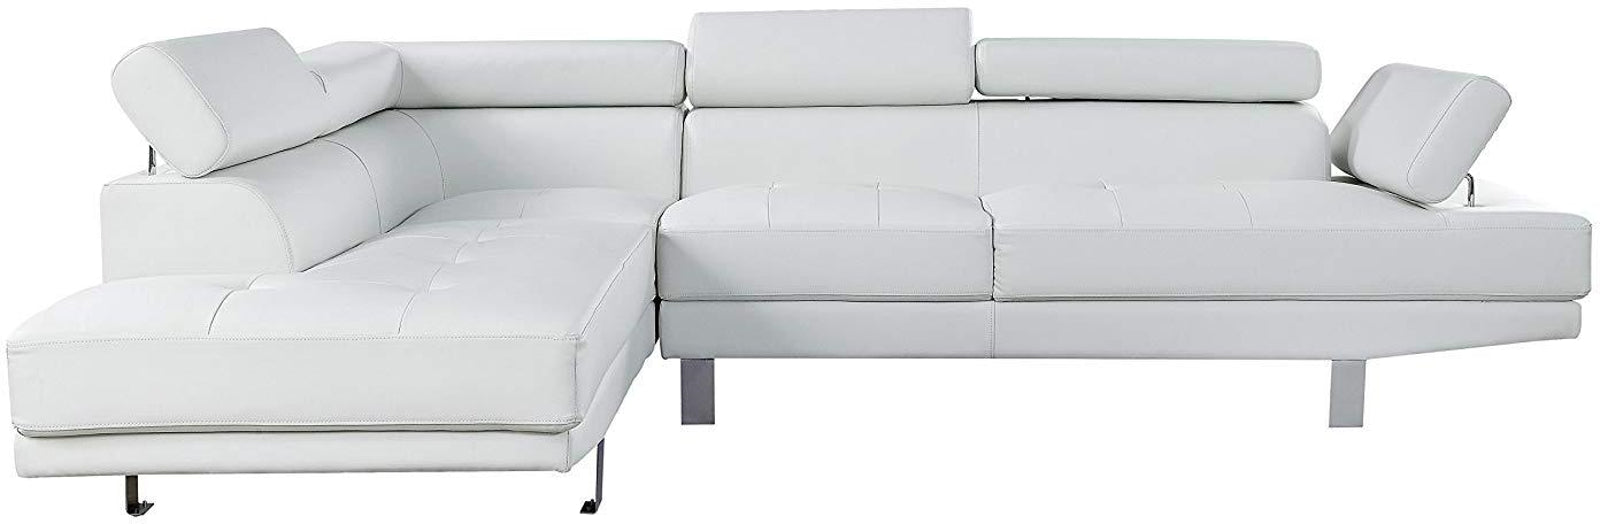 Acme Furniture Connor Sectional Sofa Set in Cream 52645 image